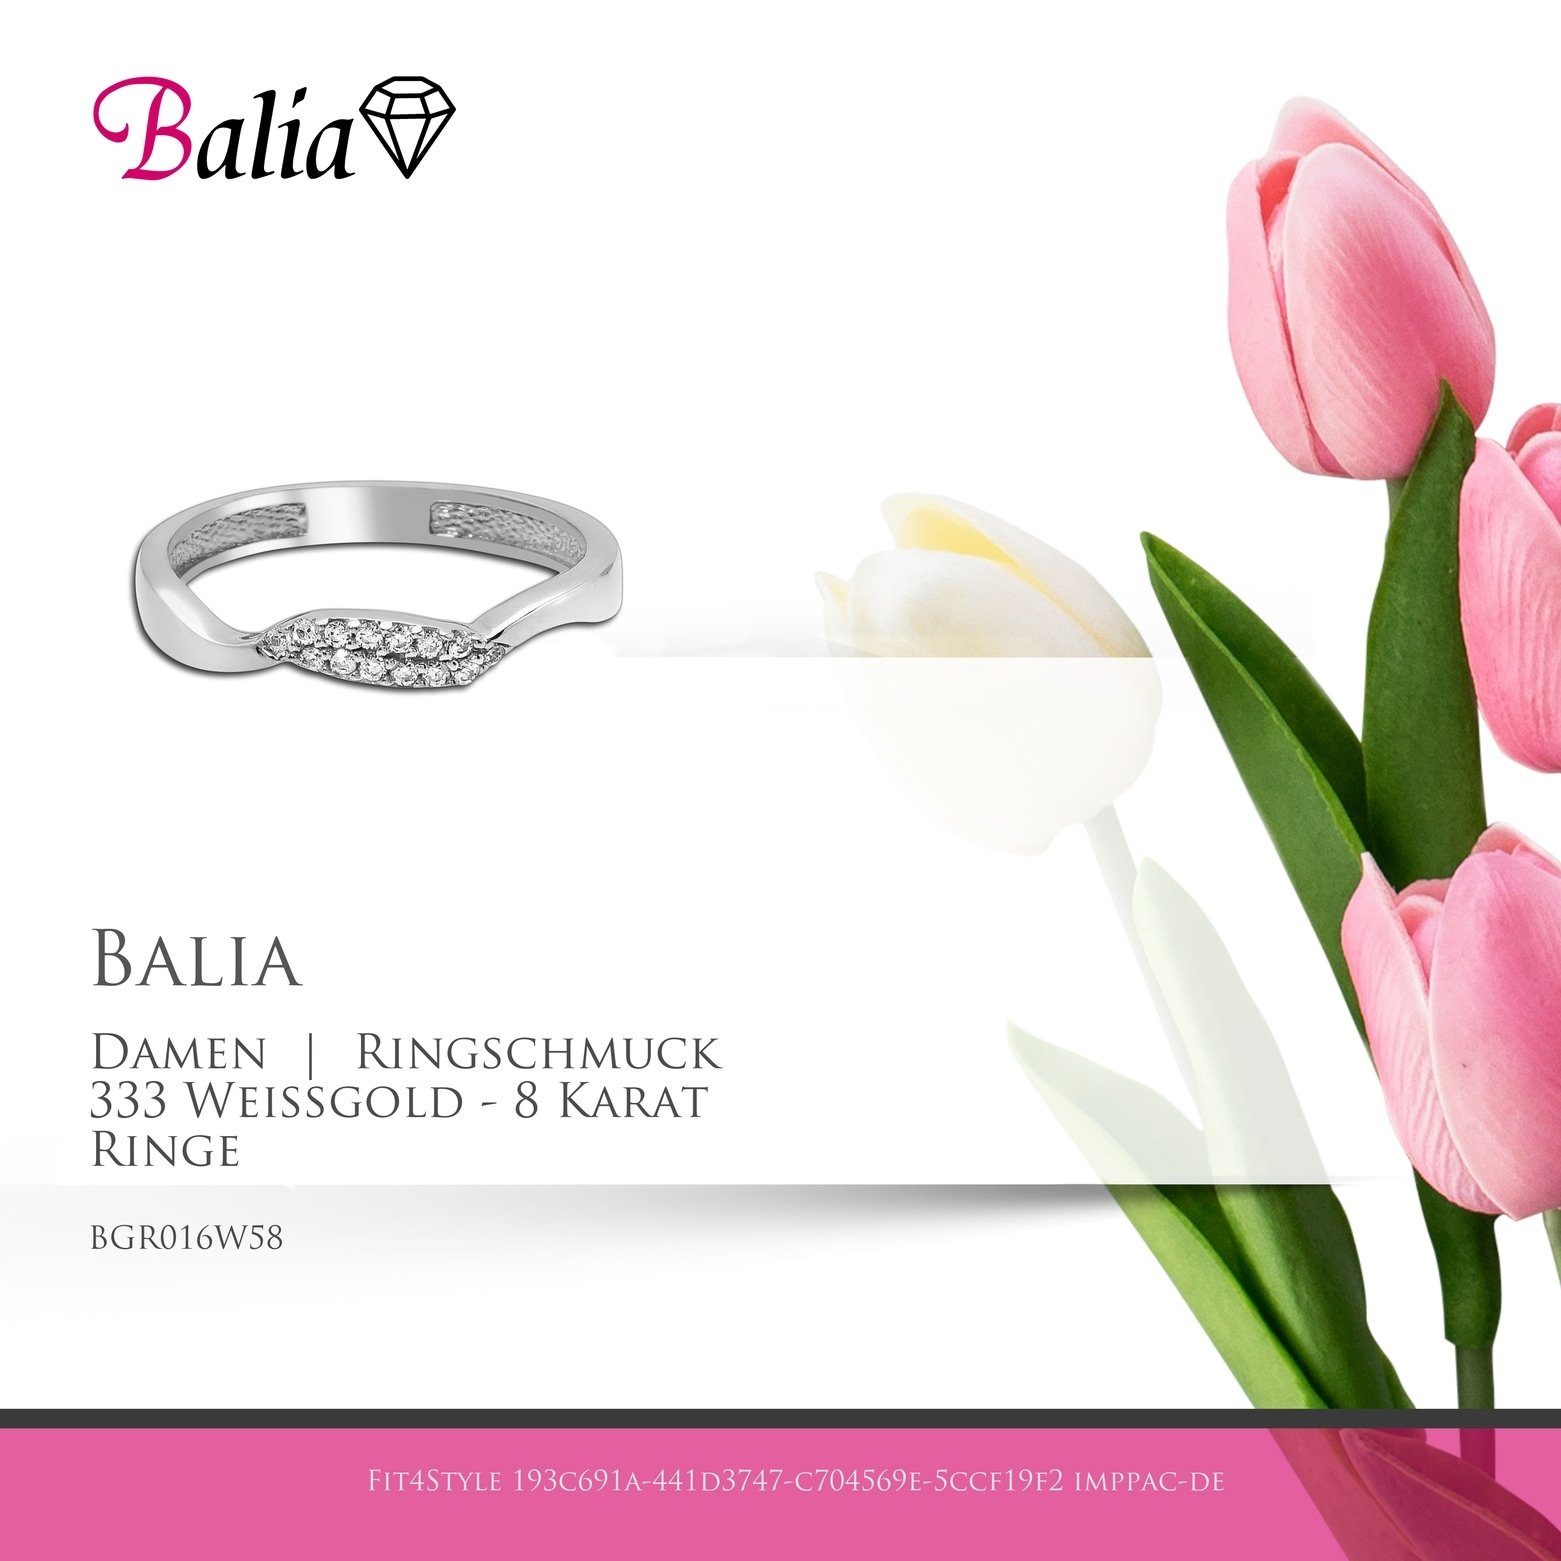 Balia Goldring Karat Damen - Welle 8 Ring Weißgold (Fingerring), Damen 333 Gold Gr.58 8Kt Ringe, 58 Welle, (18,4) Balia